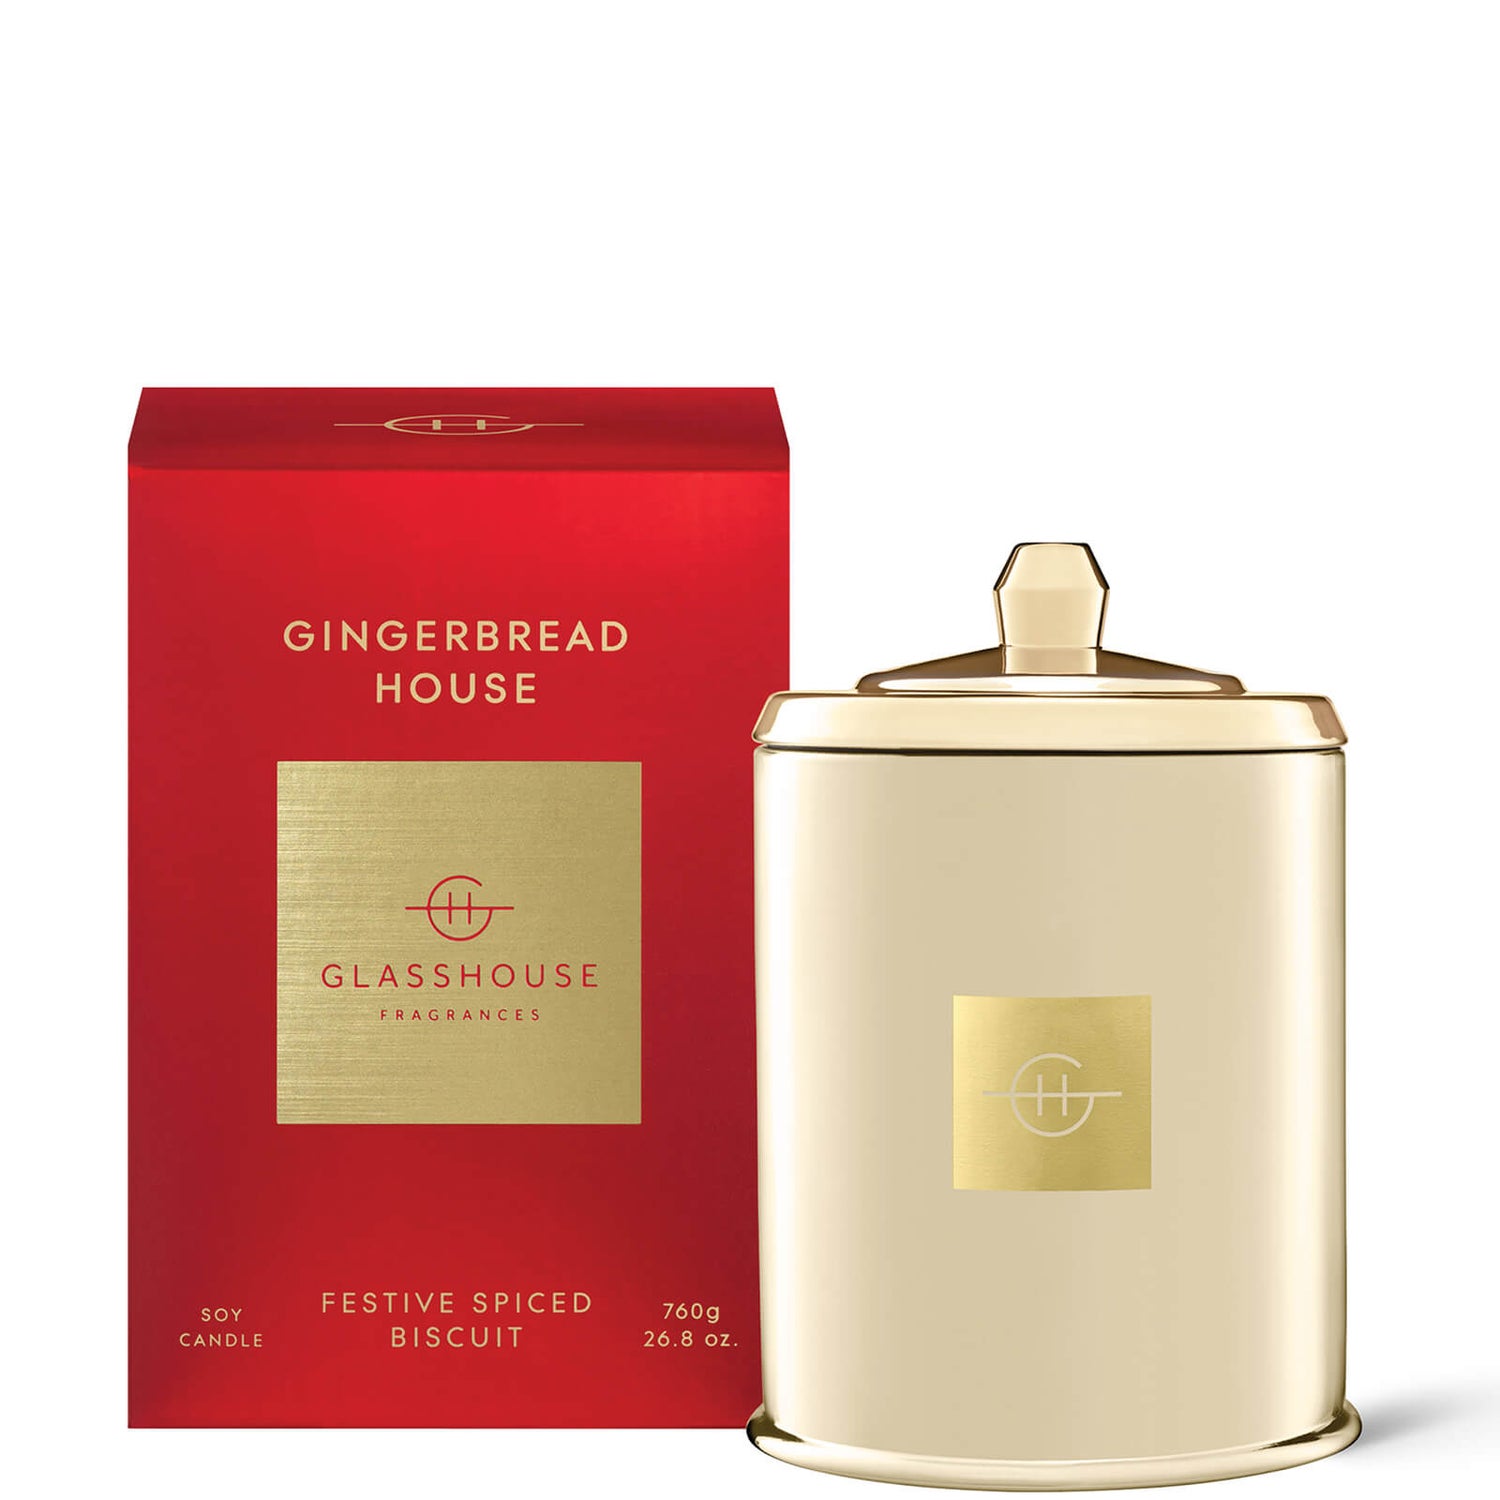 Glasshouse Fragrances Gingerbread House Candle 760g - LOOKFANTASTIC